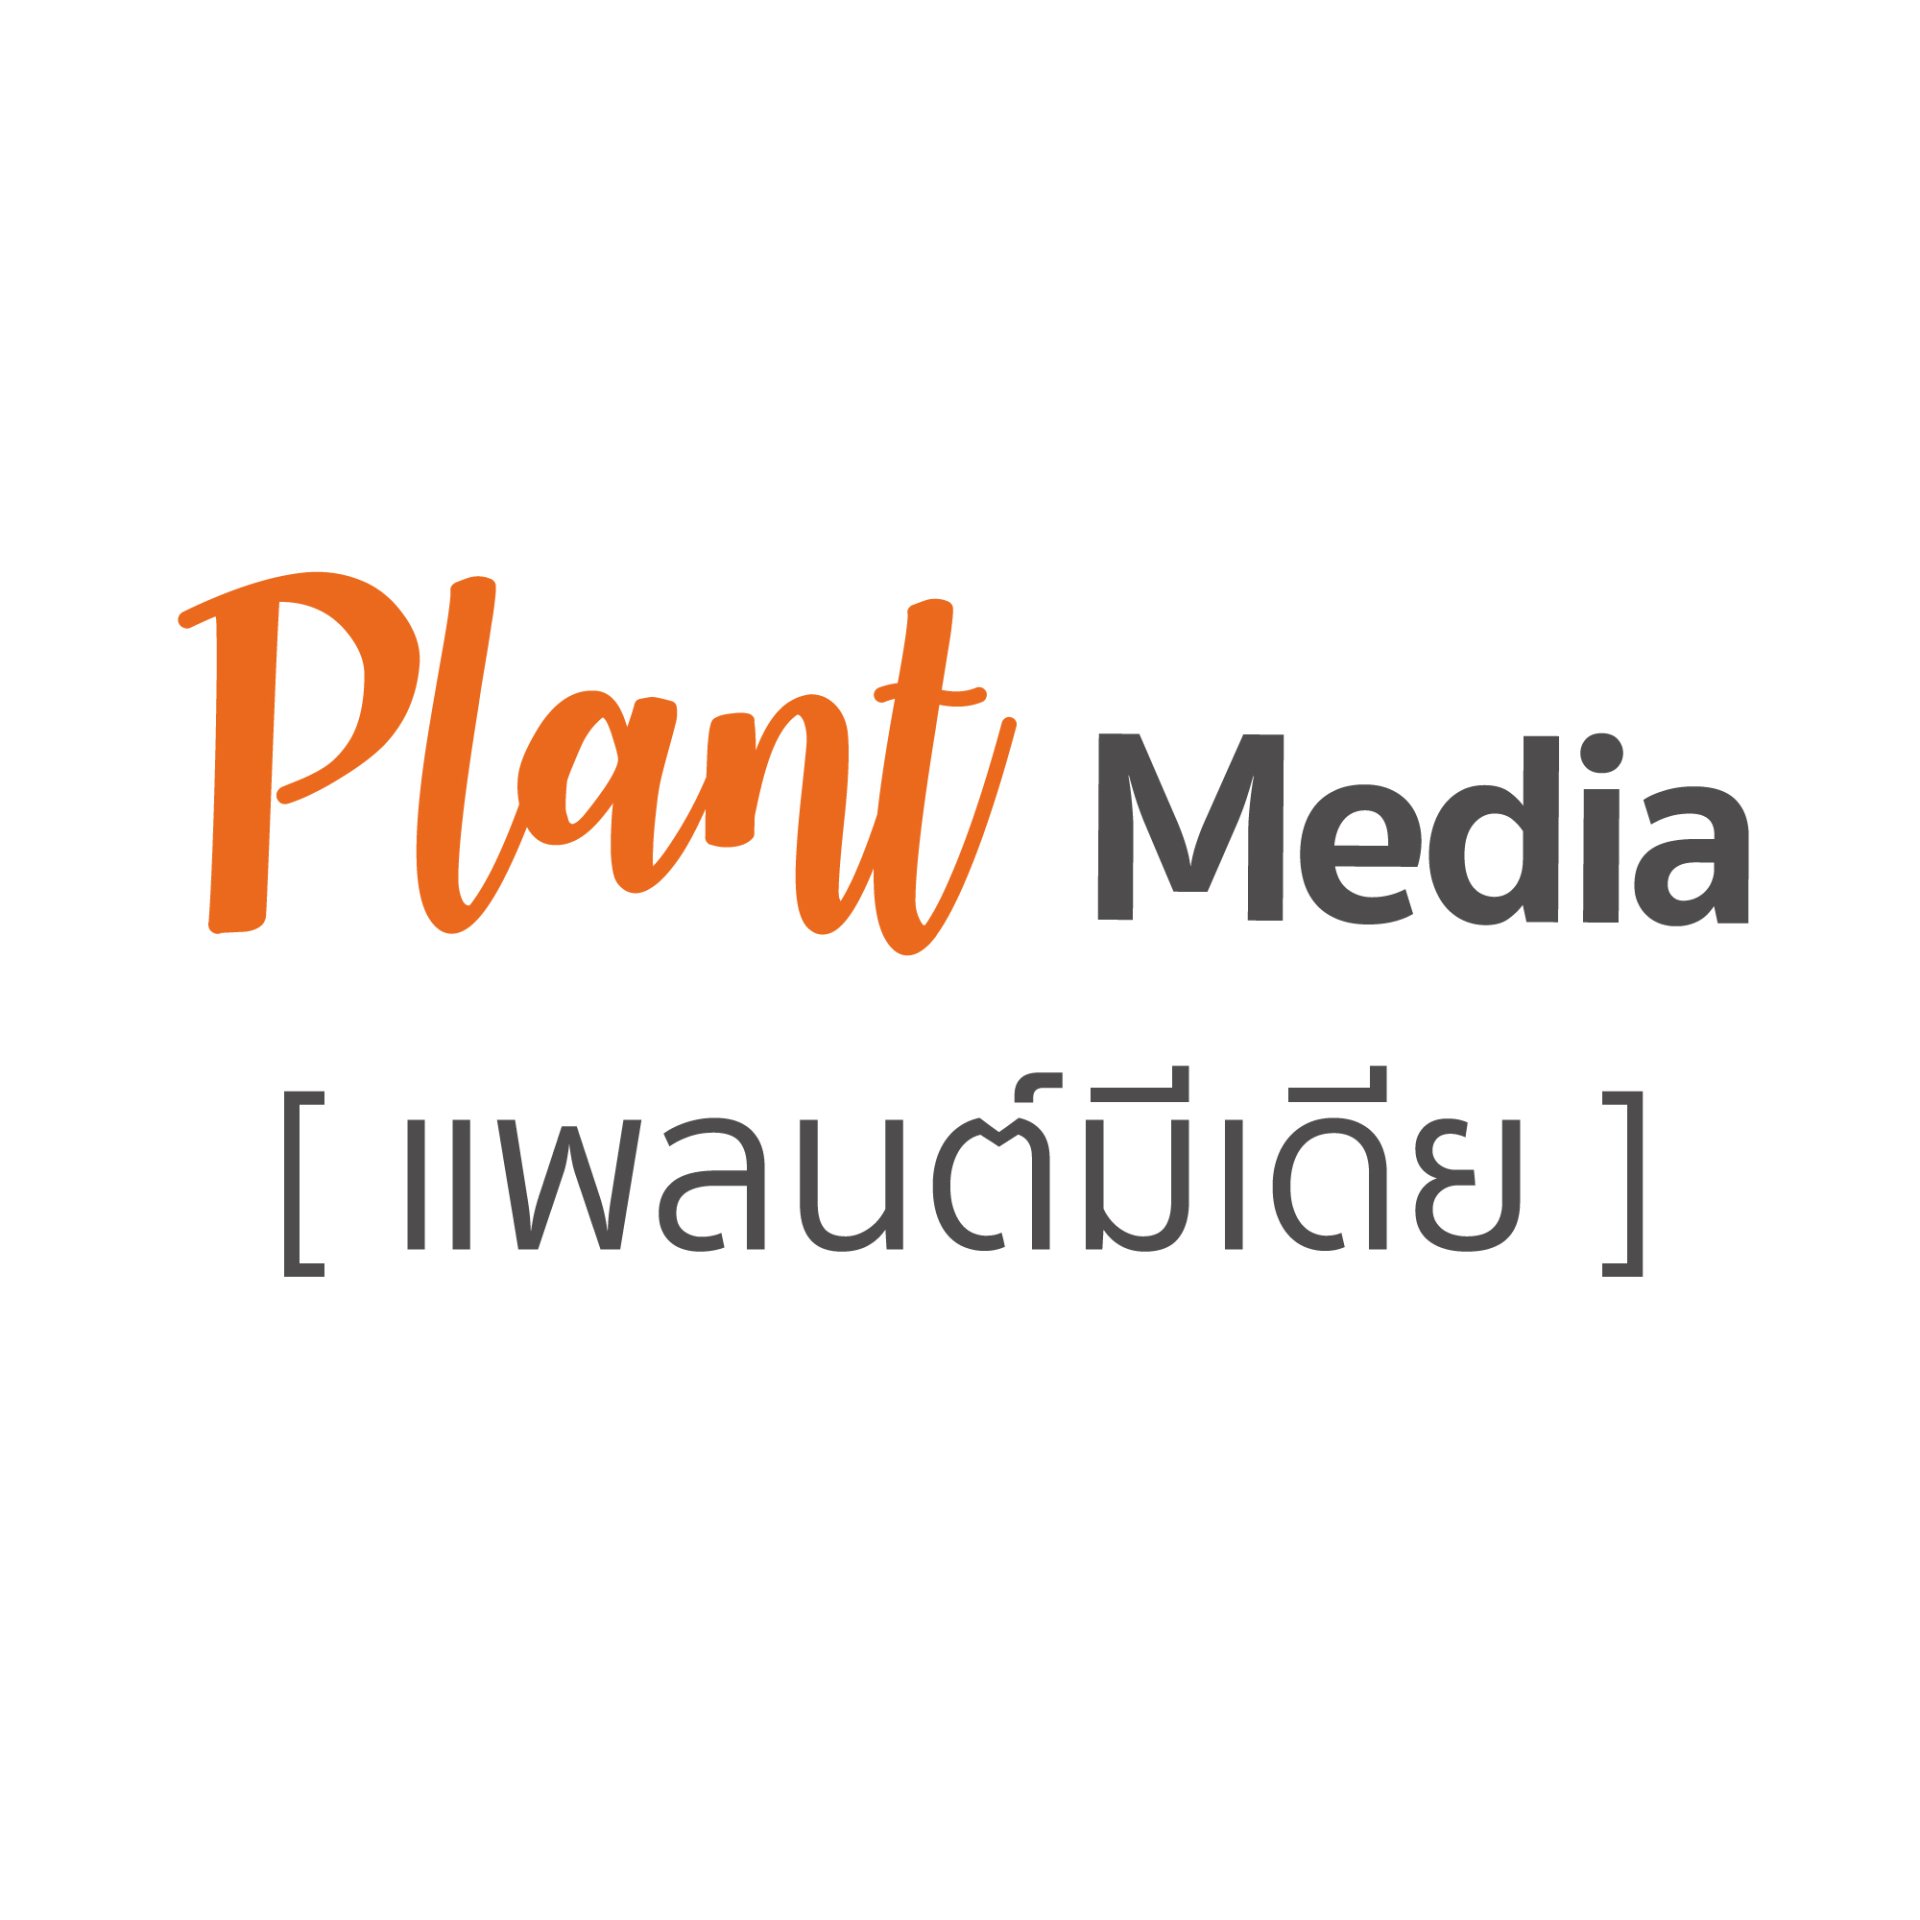 Plant Media แพลนต์มีเดีย Logo โลโก้ ให้บริการออกแบบสื่อสิ่งพิมพ์ ออนไลน์ ดิจิทัล